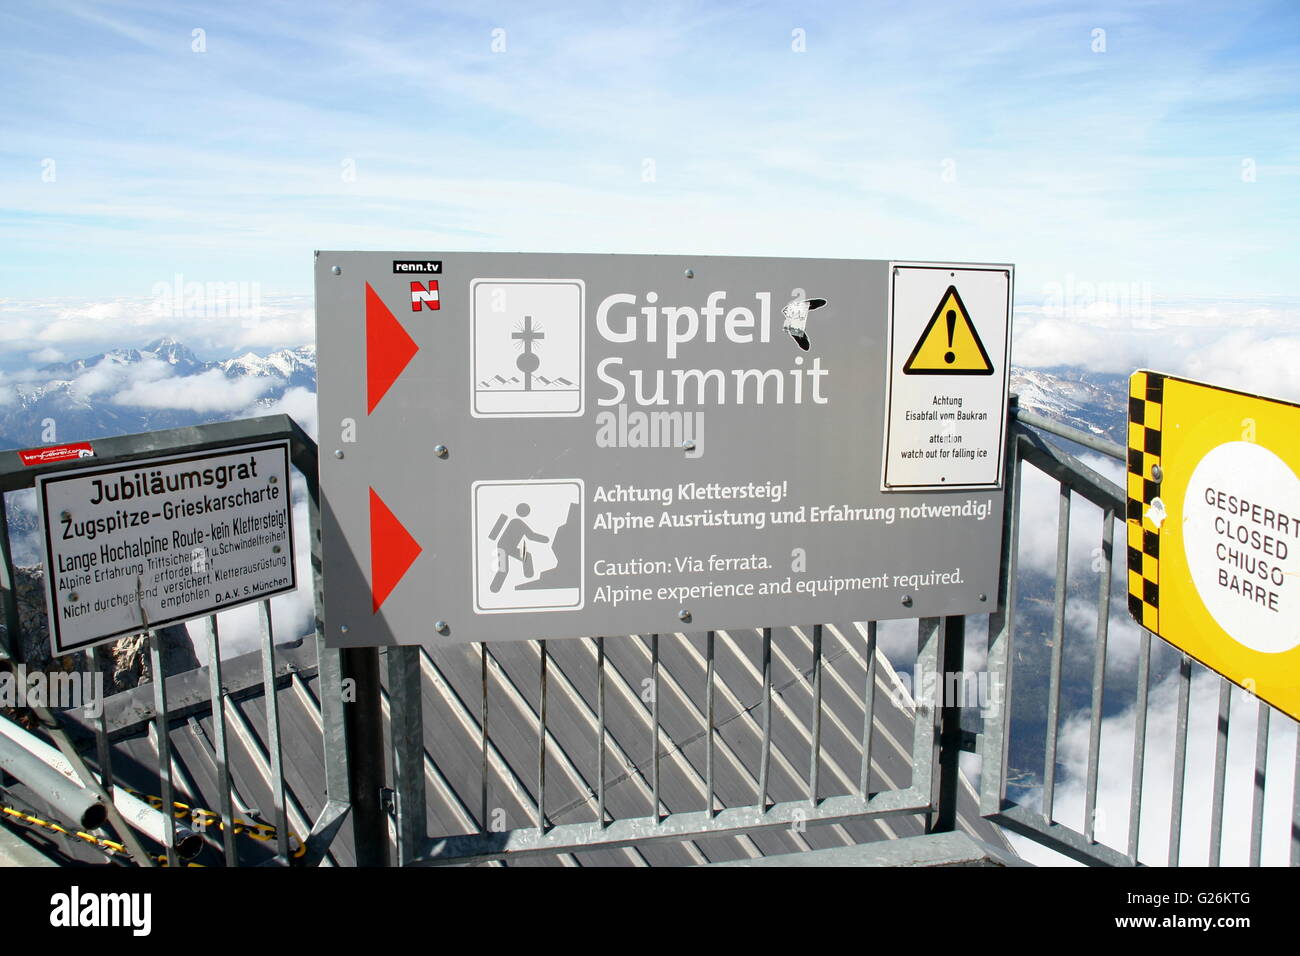 Gipfel summit sign, Zugspitze, highest peak in Germany. Stock Photo